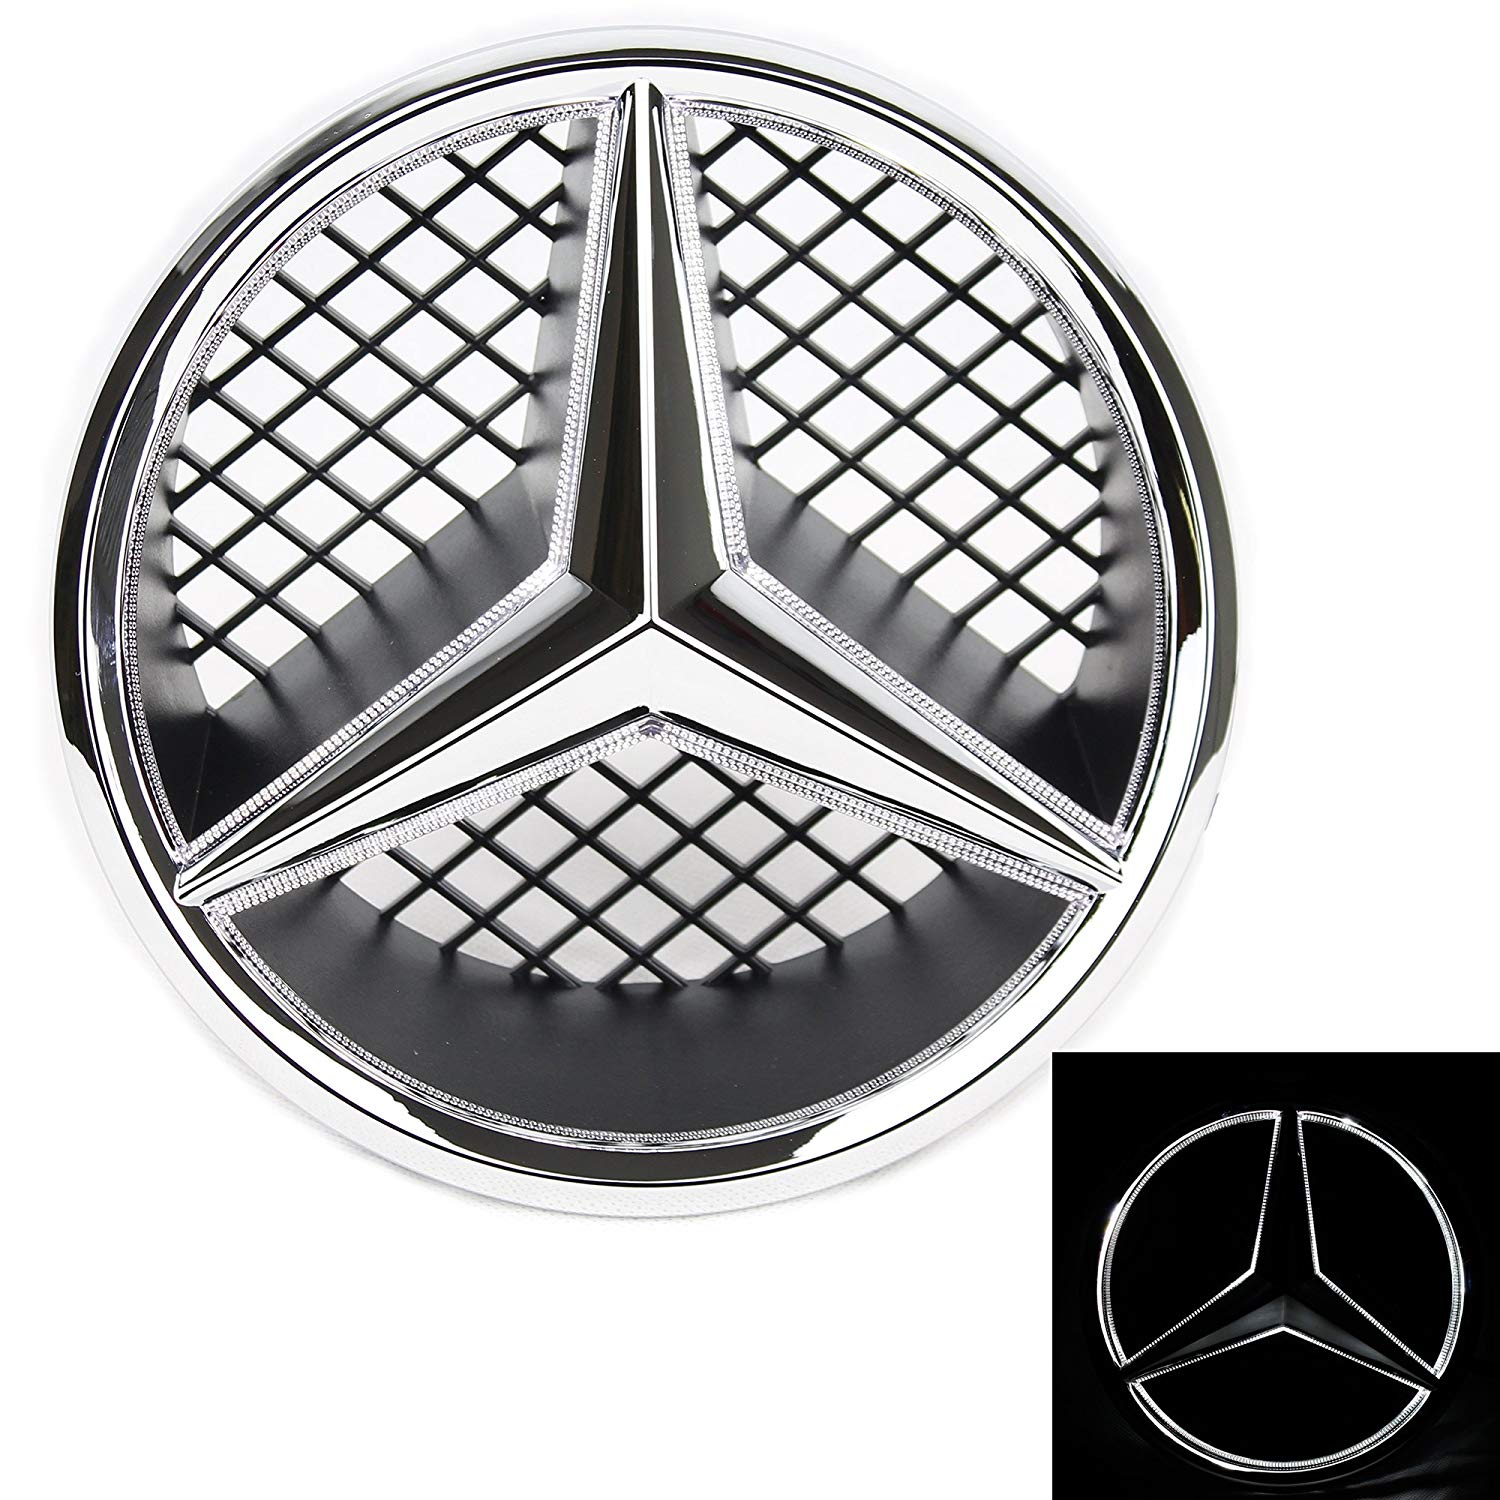 Benz Black Logo - Amazon.com: JetStyle LED Emblem for Mercedes Benz 2005-2013, Front ...